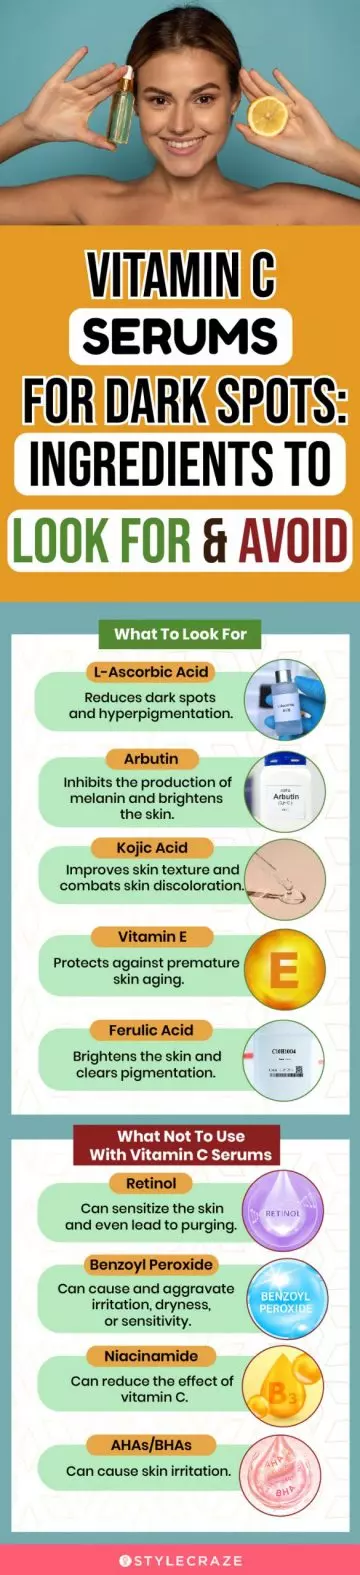 Vitamin C Serums For Dark Spots (infographic)